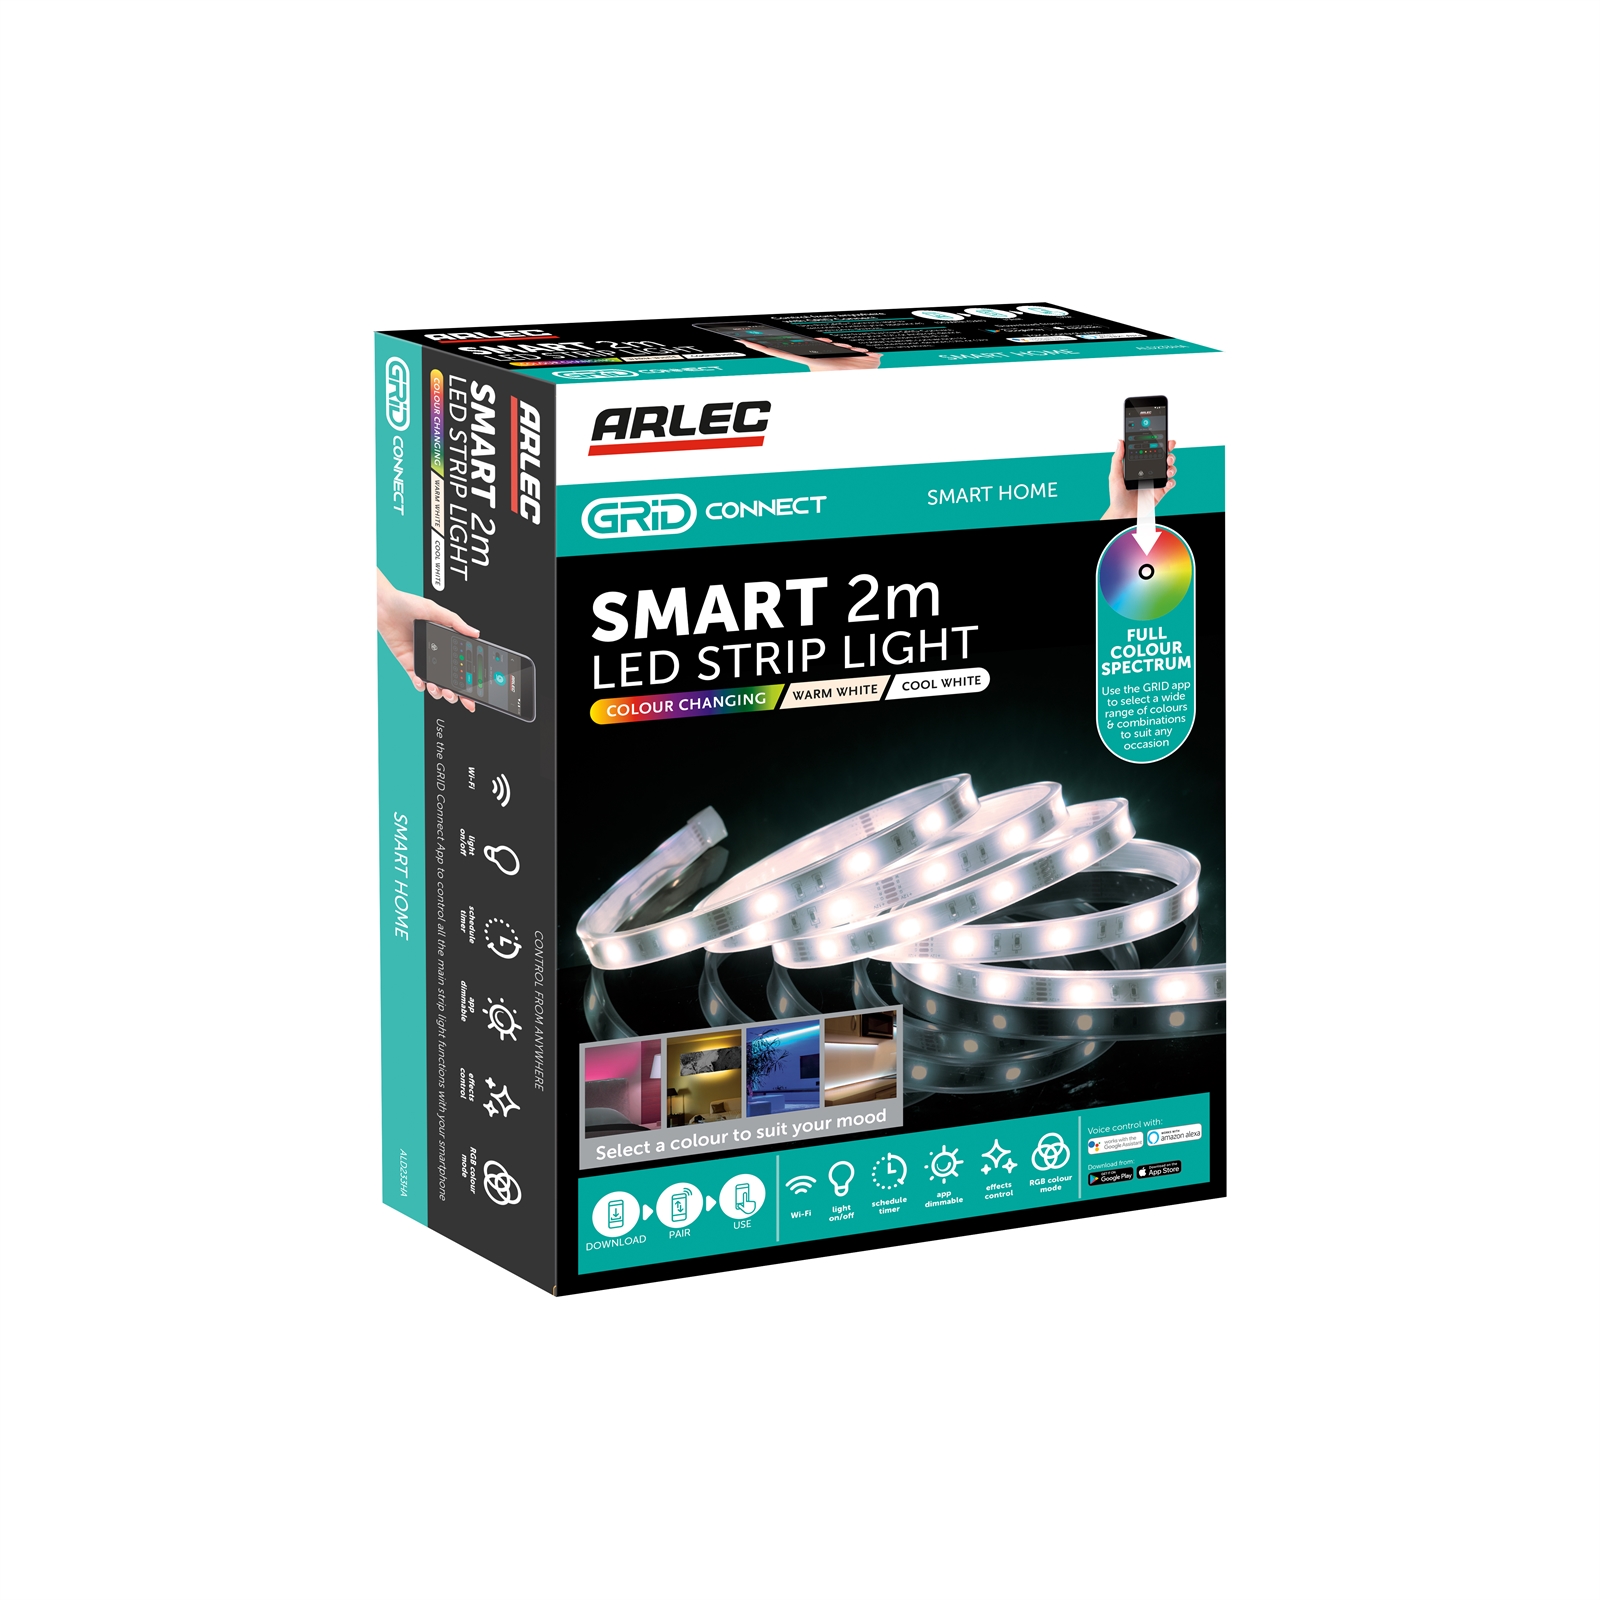 Arlec Smart 2m LED Colour Changing Strip Light